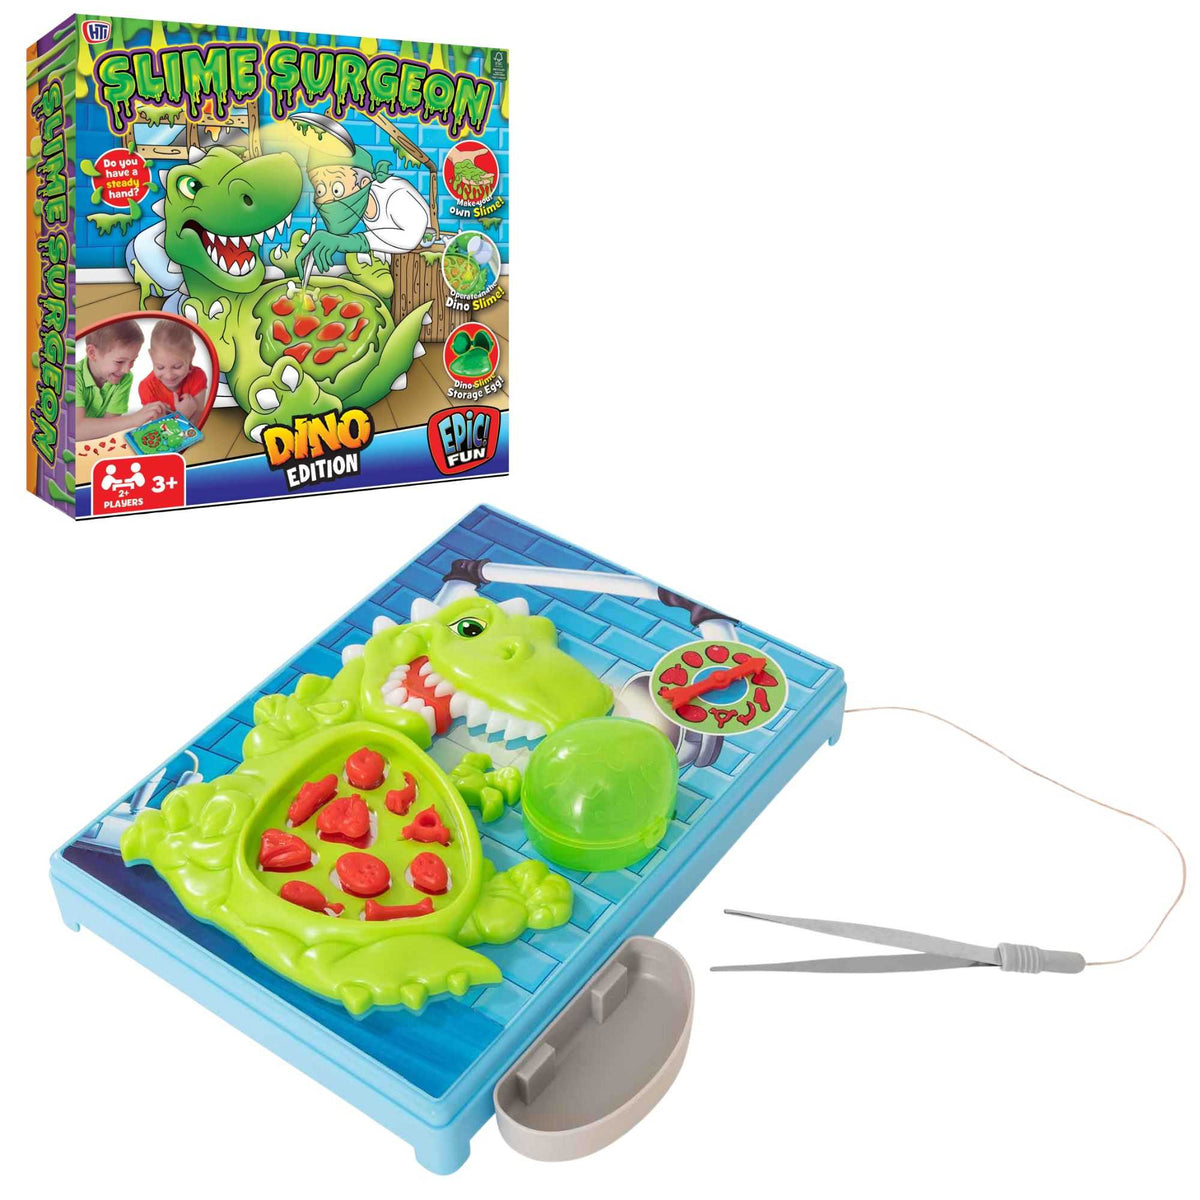 Slime Surgeon Game - Dinosaur Edition